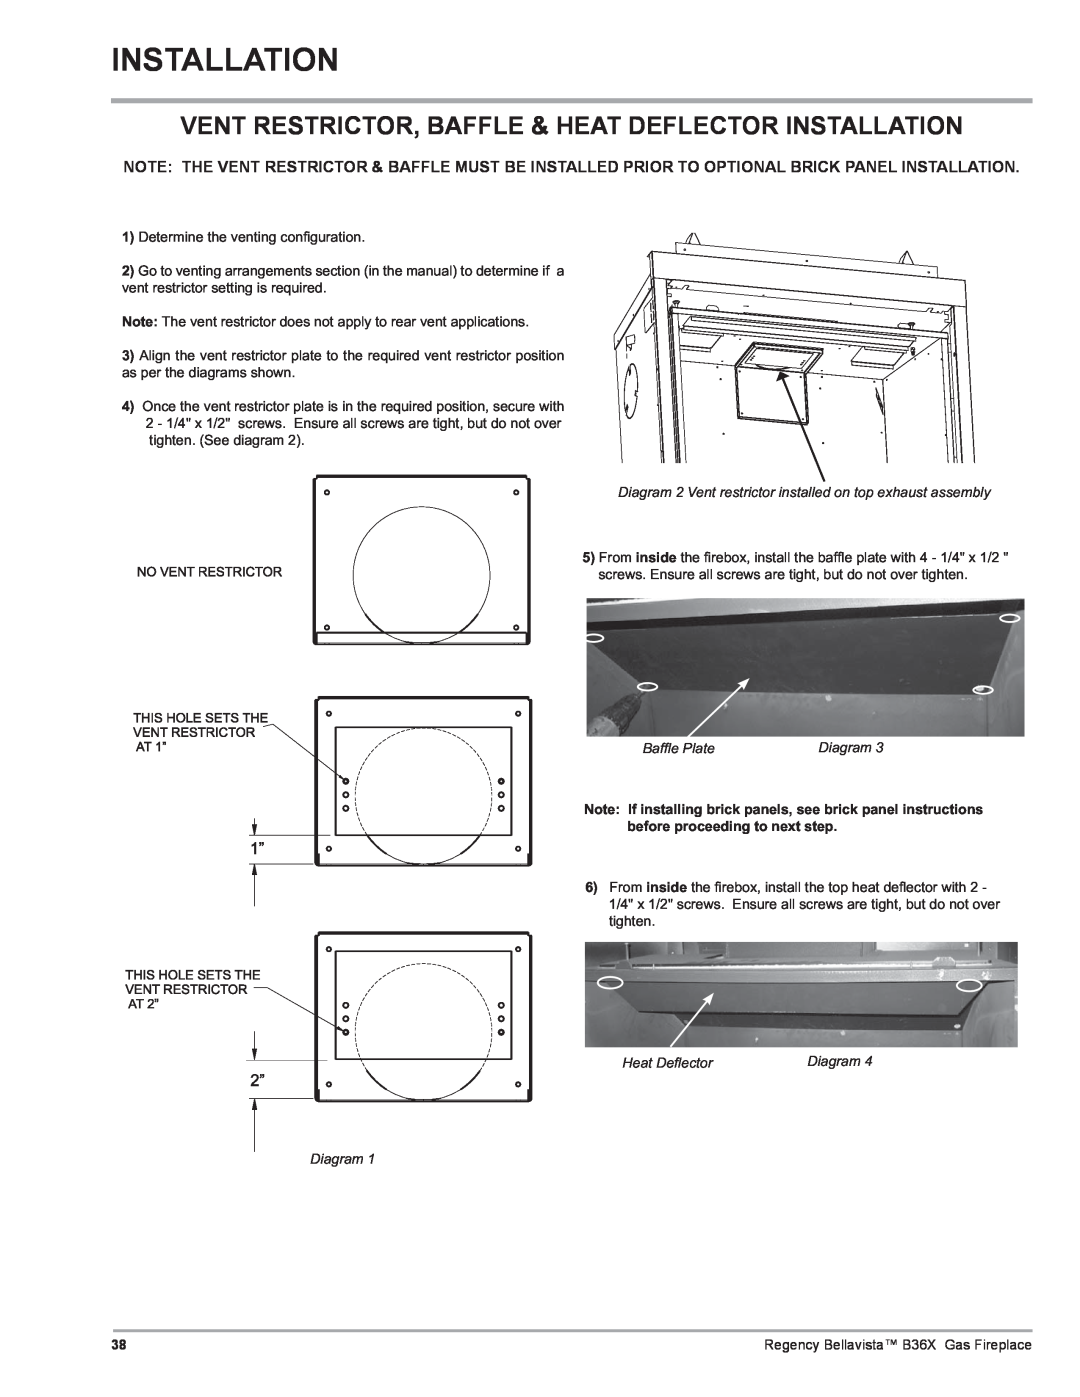 Regency installation manual Installation, Bafﬂ e Plate, Heat Deﬂ ector, Diagram, Regency Bellavista B36X Gas Fireplace 